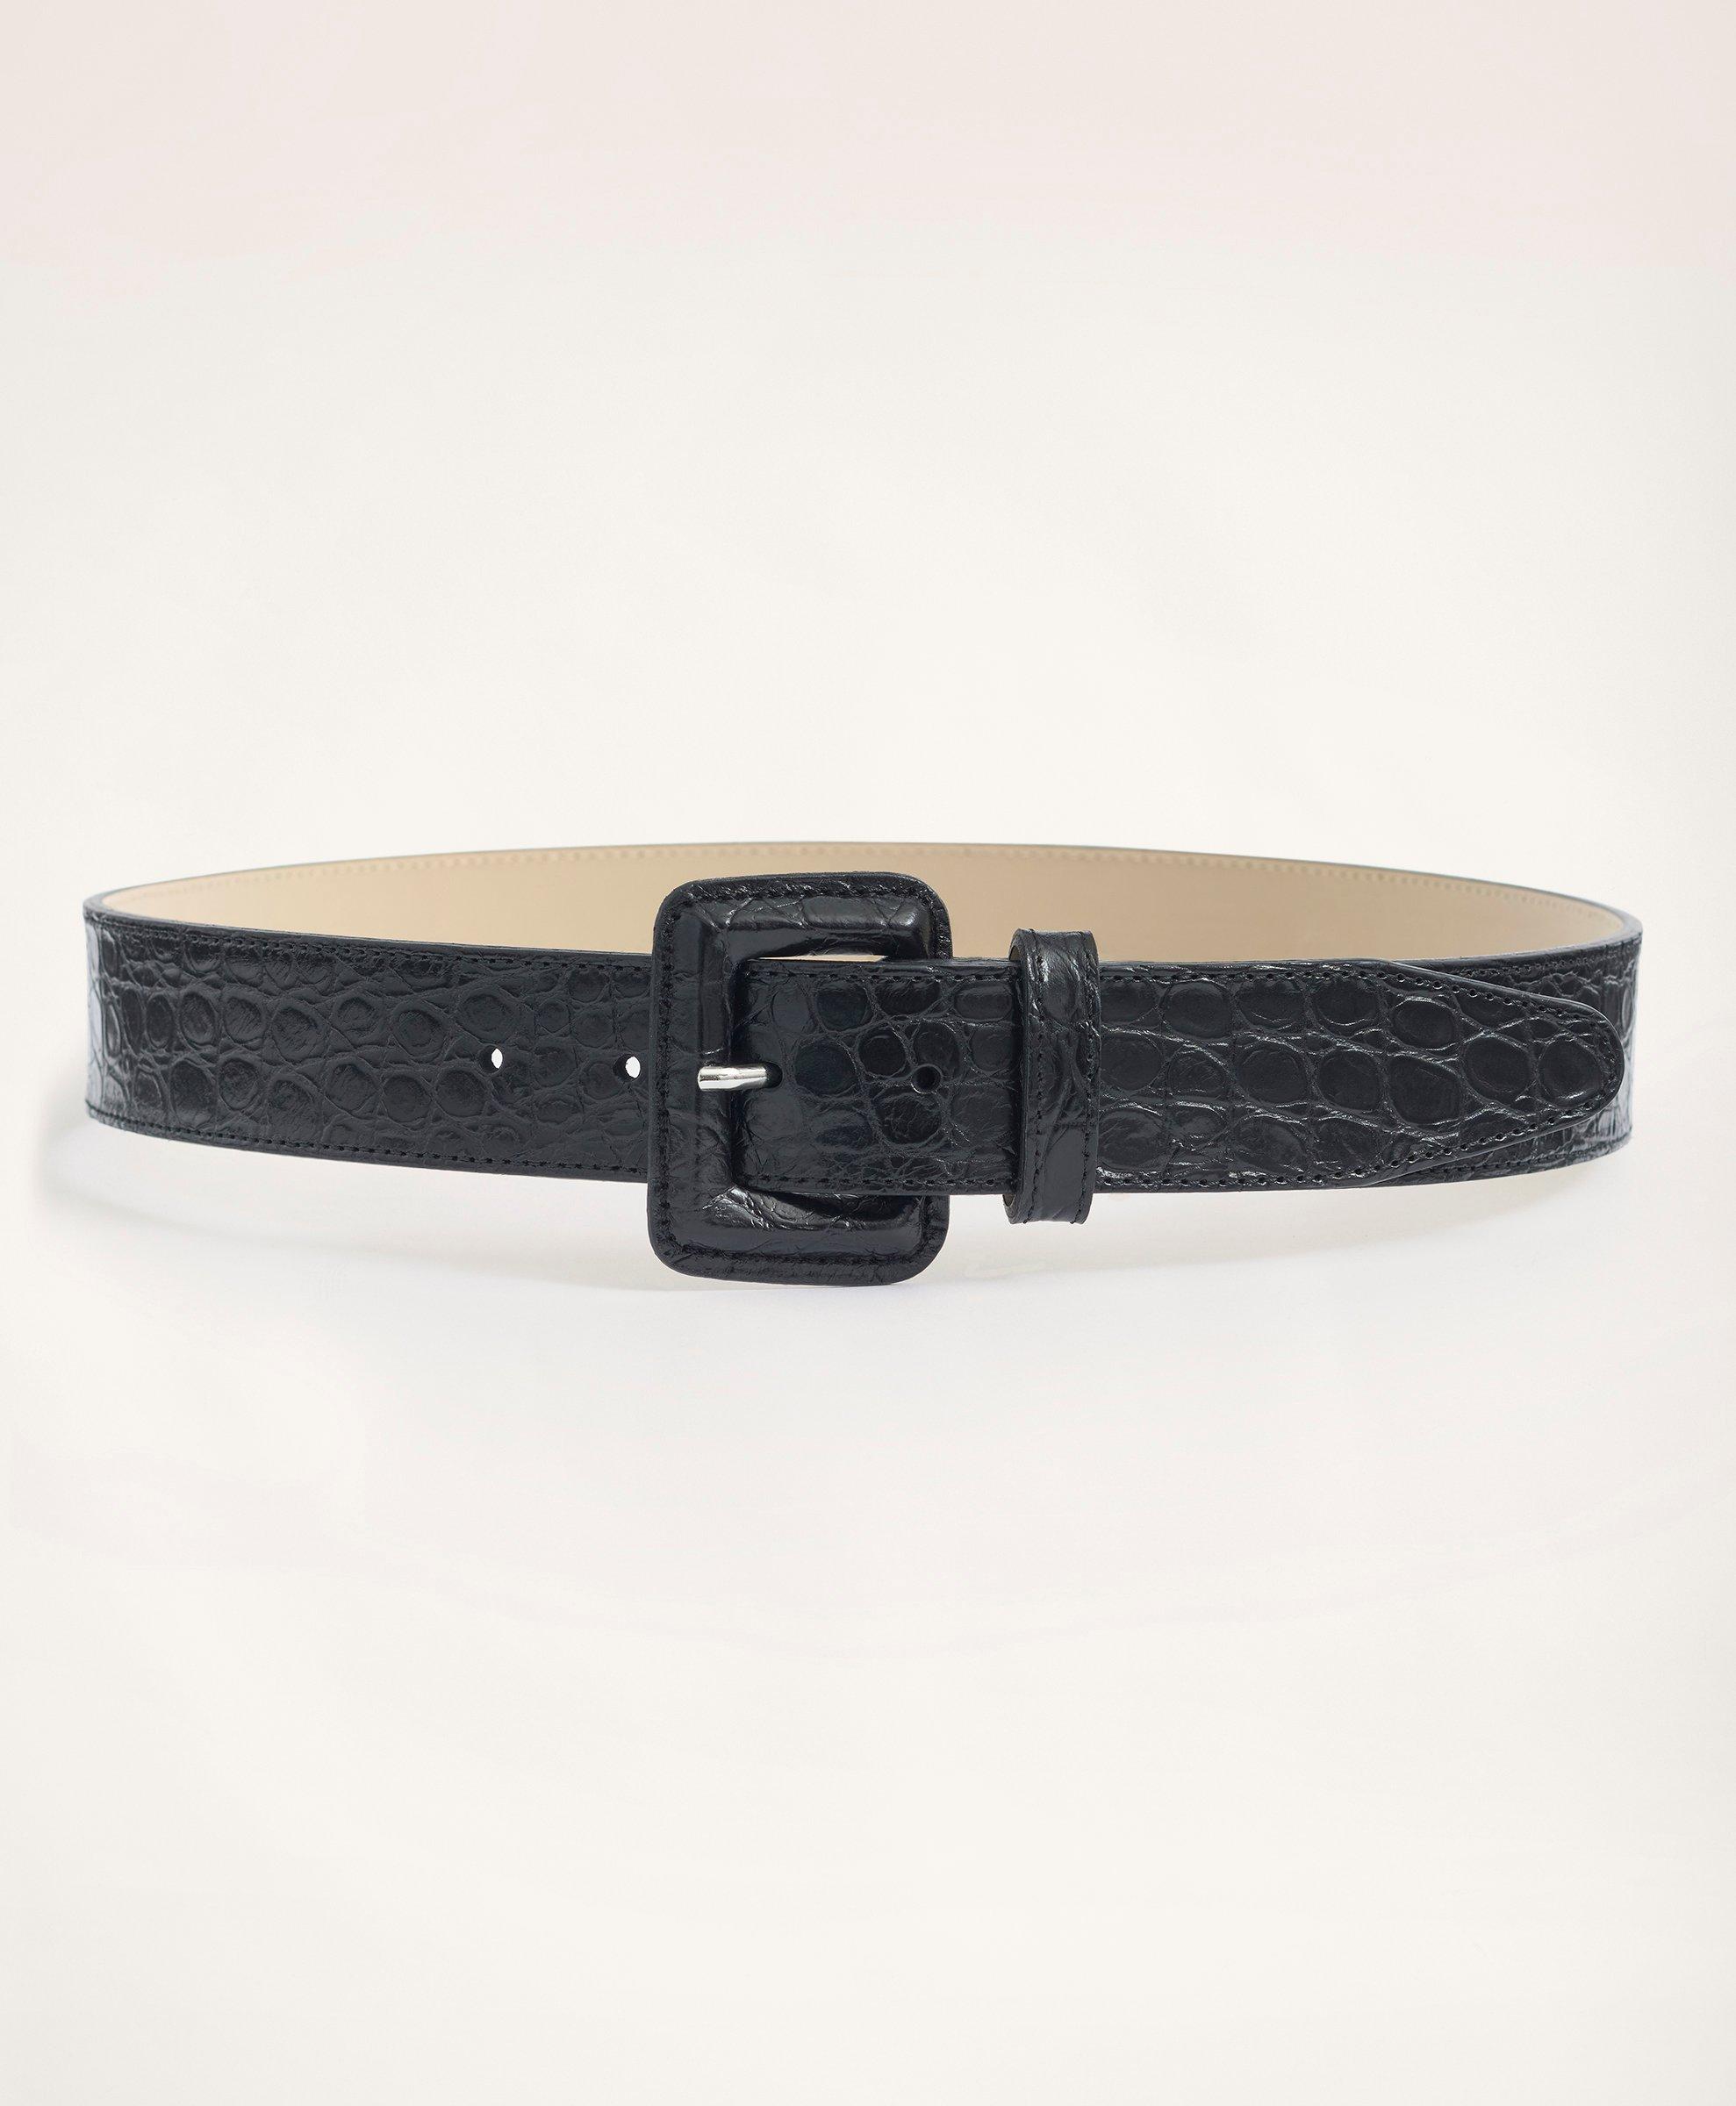 Burberry Women's Croc-Embossed Leather Belt